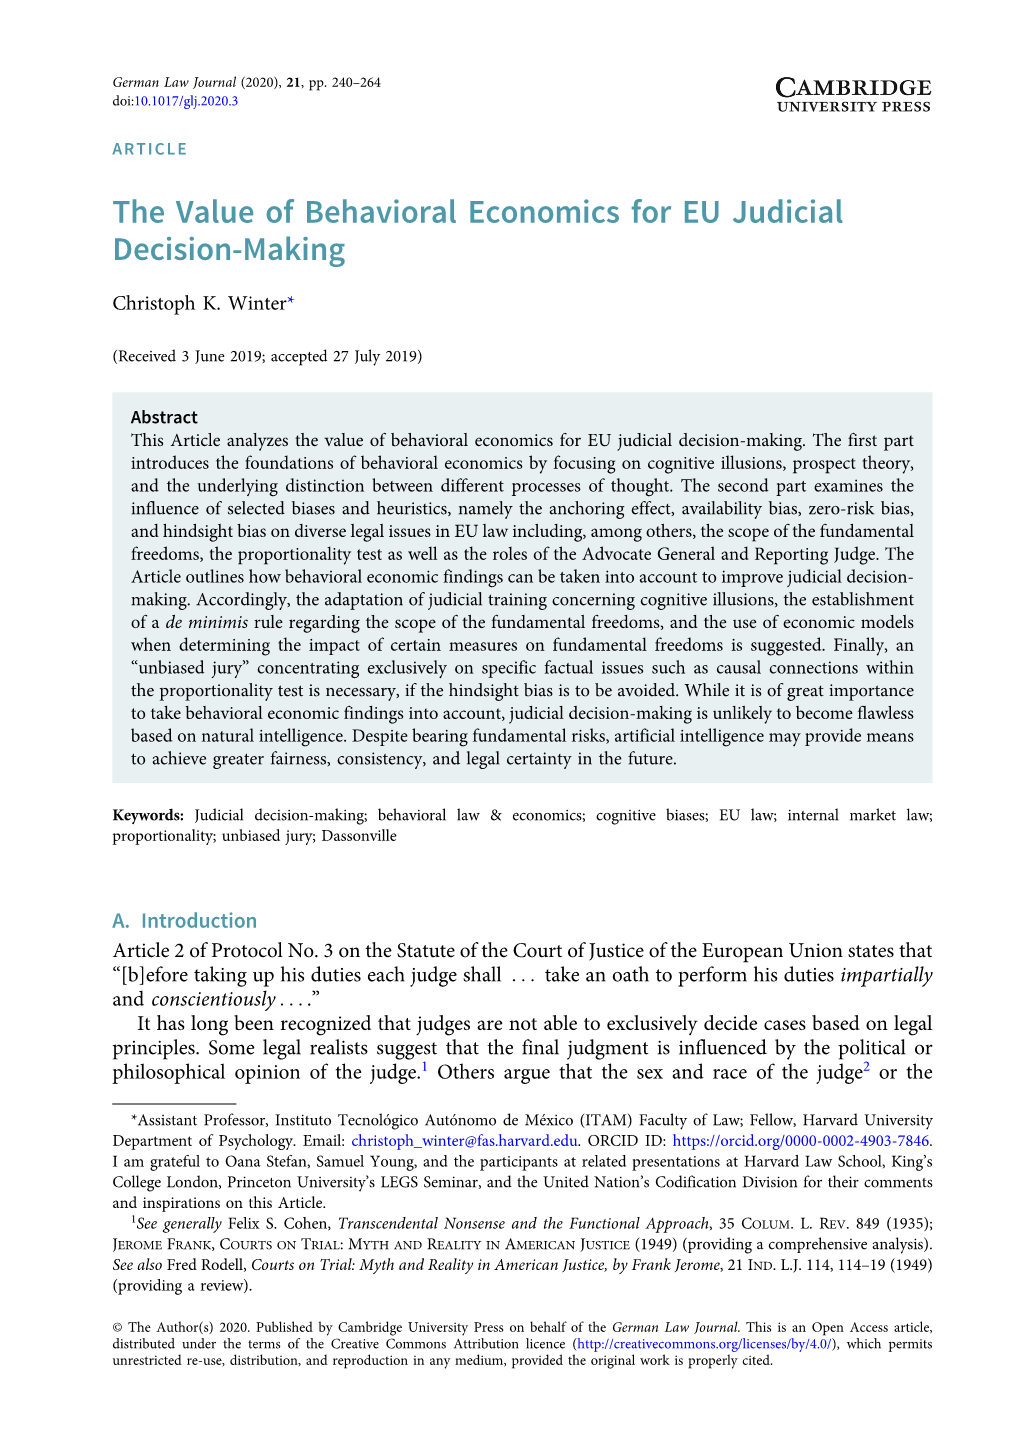 The Value of Behavioral Economics for EU Judicial Decision-Making